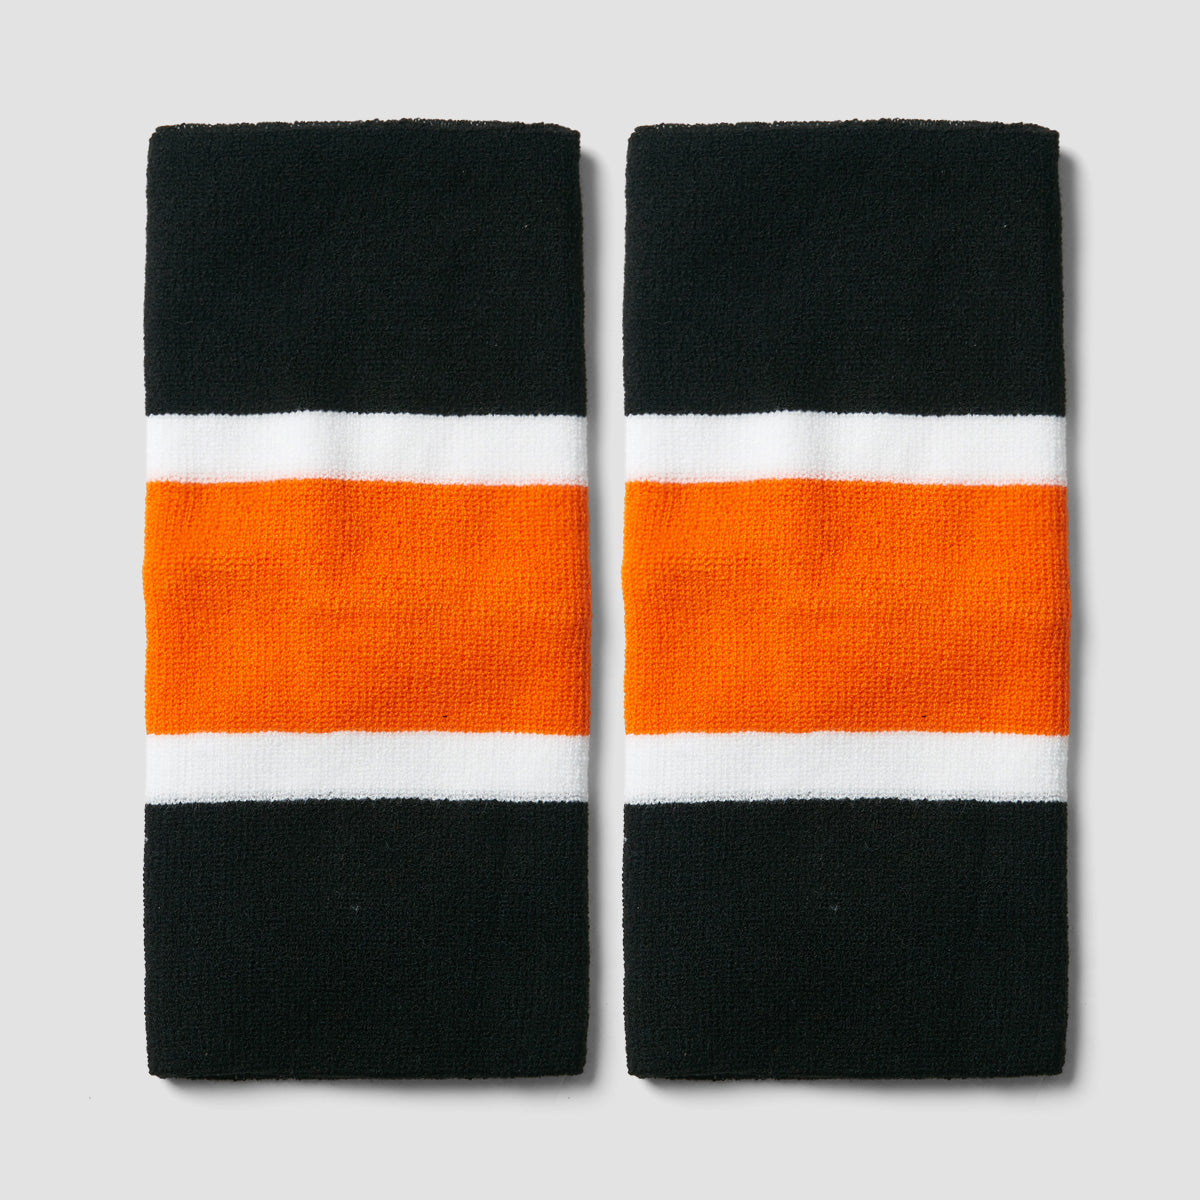 Ventronic Puffers Skate Hockey Socks Leg Warmers Black/Orange/White